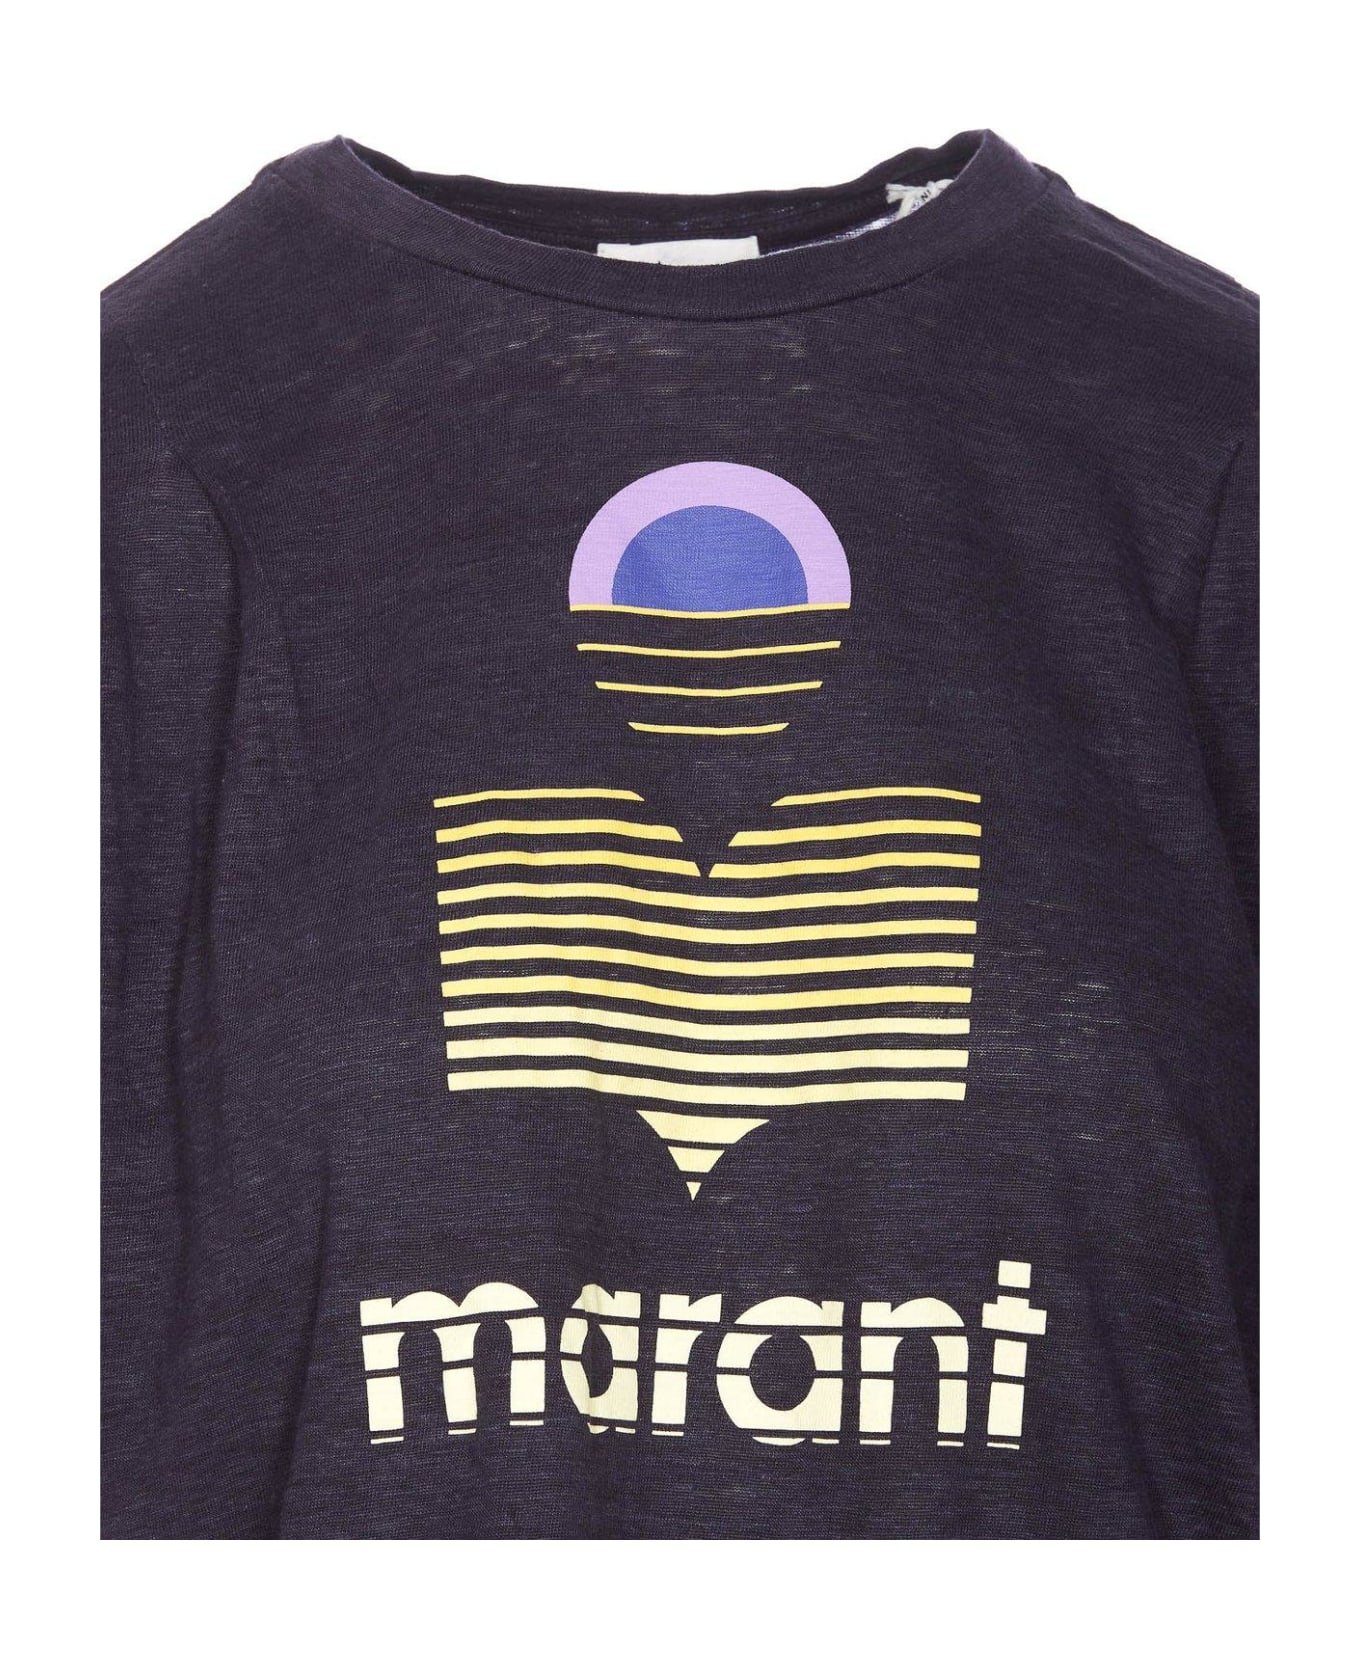 Marant Étoile Logo Printed Cropped T-shirt - Fn Faded Night